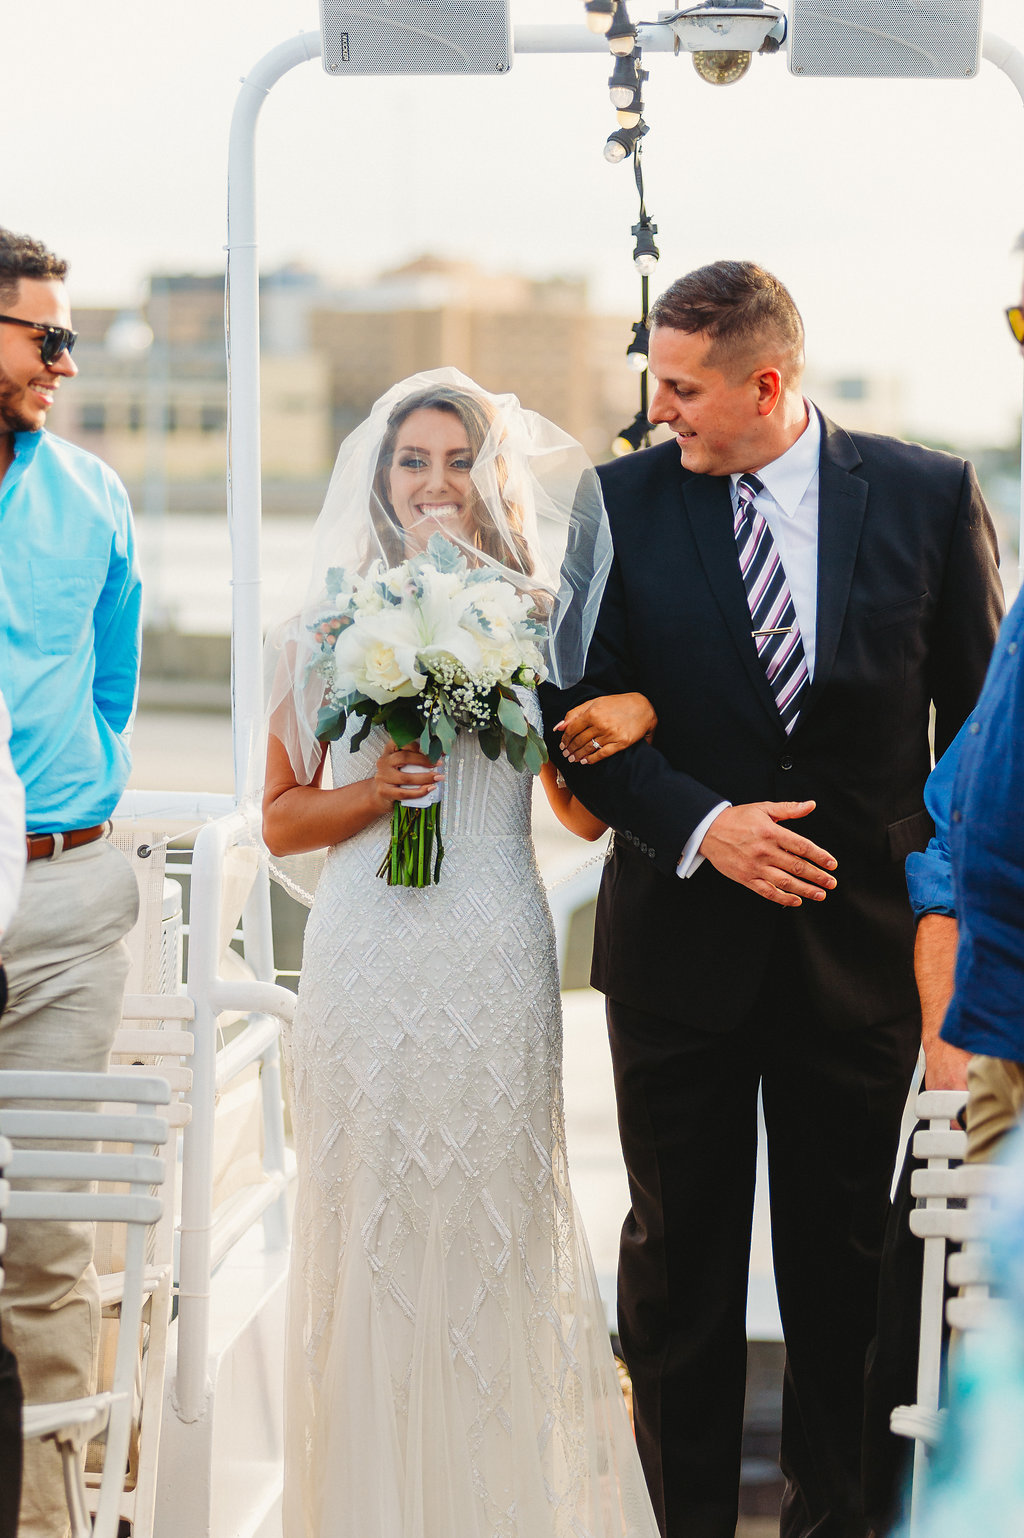 Florida Bride Walking Down the Aisle Wedding Ceremony Portrait | Tampa Waterfront Wedding Venue Yacht Starship IV